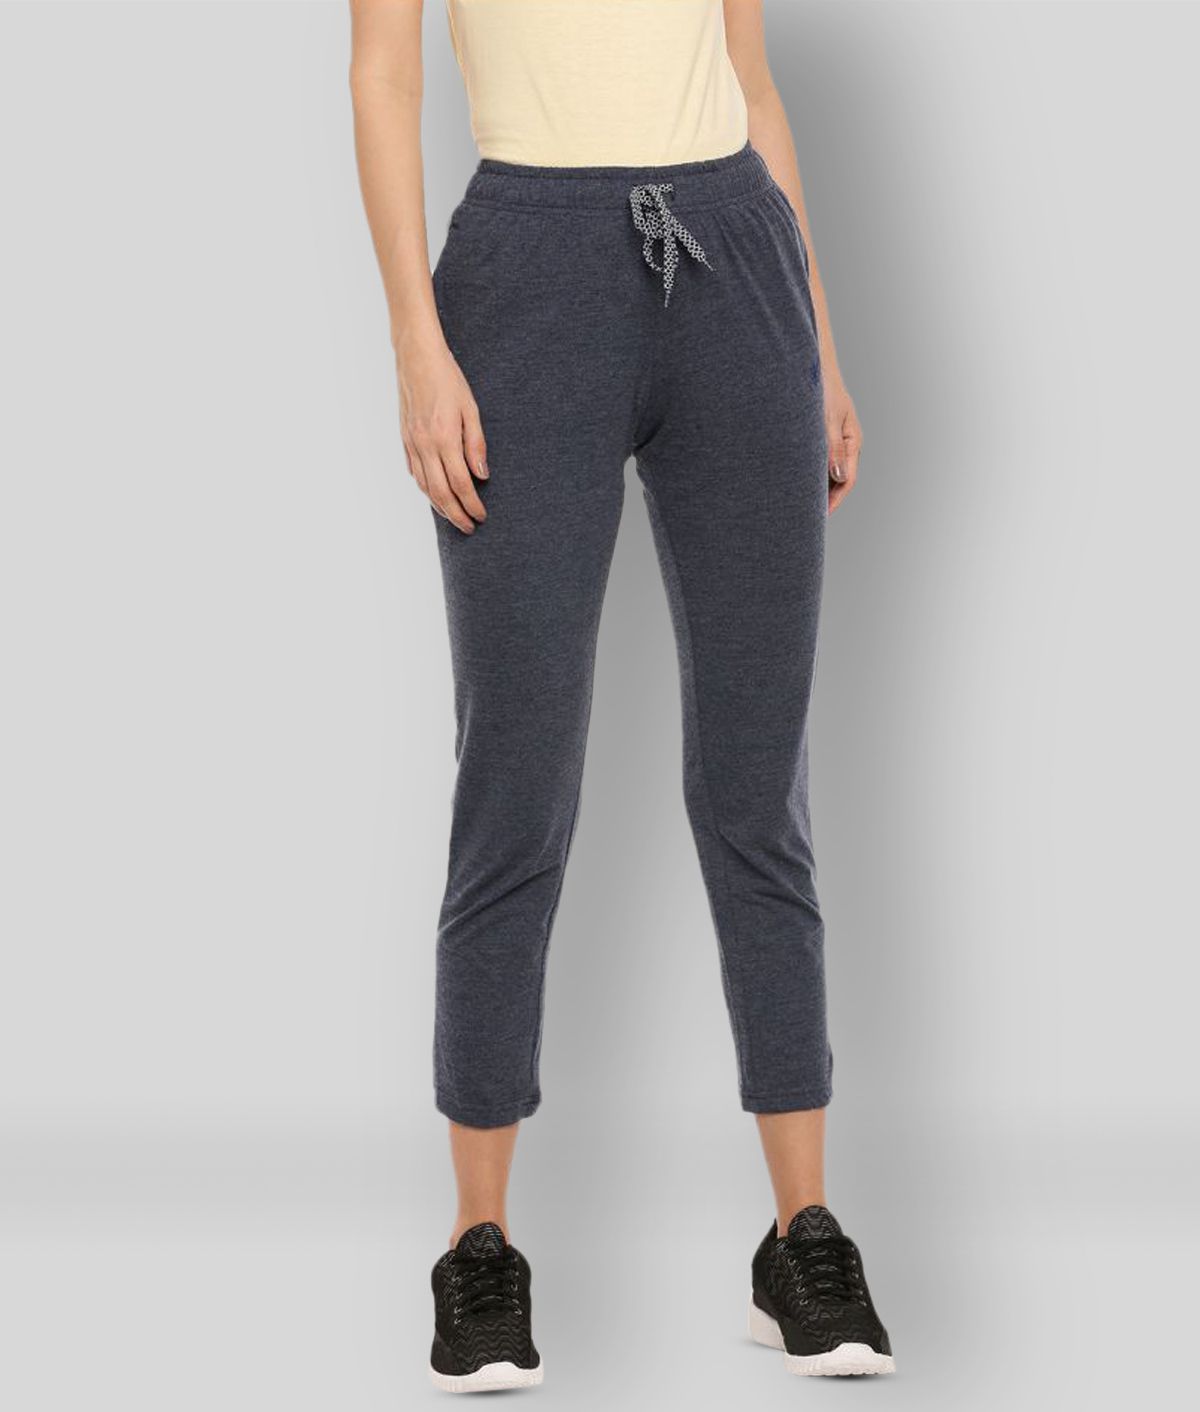     			Dollar Missy - Dark Grey Cotton Slim Fit Women's Casual Pants  ( Pack of 1 )